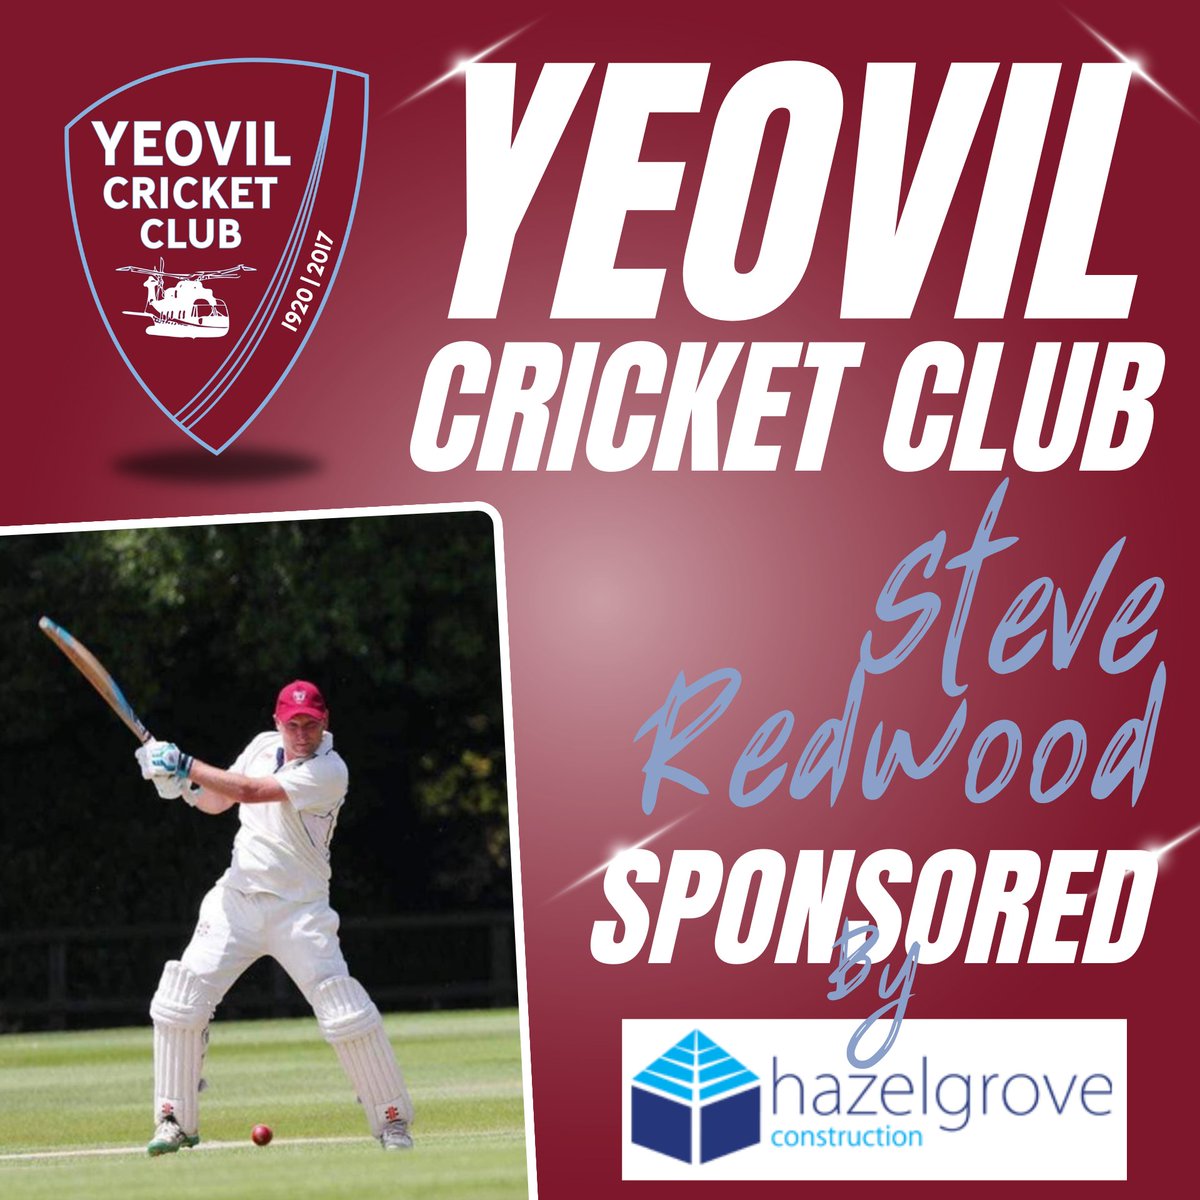 🚨 PLAYER SPONSOR 🚨 Huge thanks to Hazelgrove Construction who have sponsored Steve Redwood this season👌 #YCC